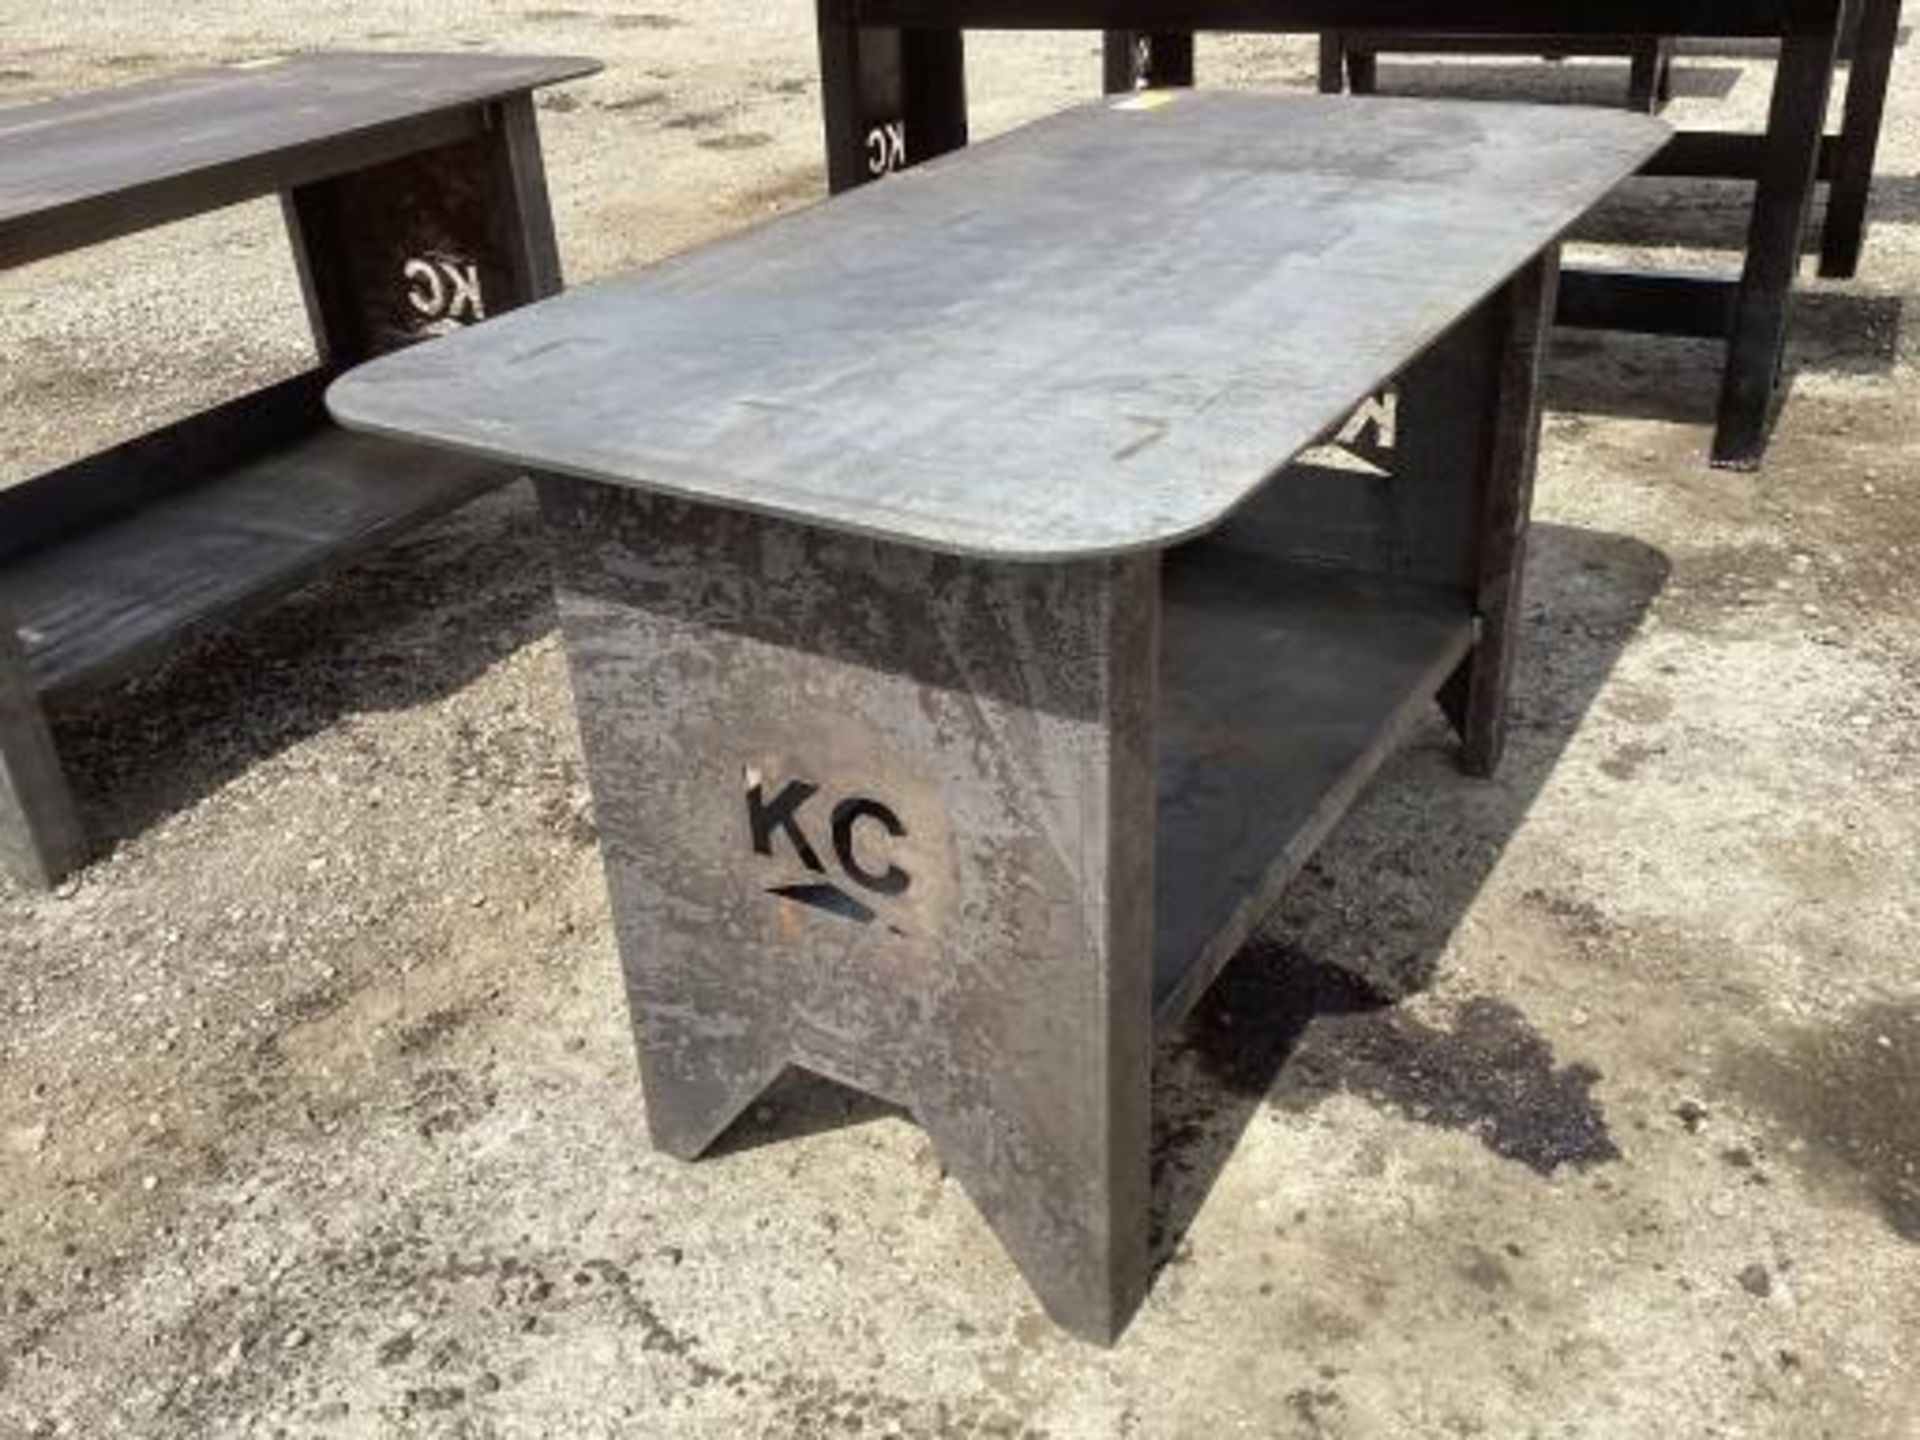 30" x 57" Kc Welding Table - Image 3 of 6